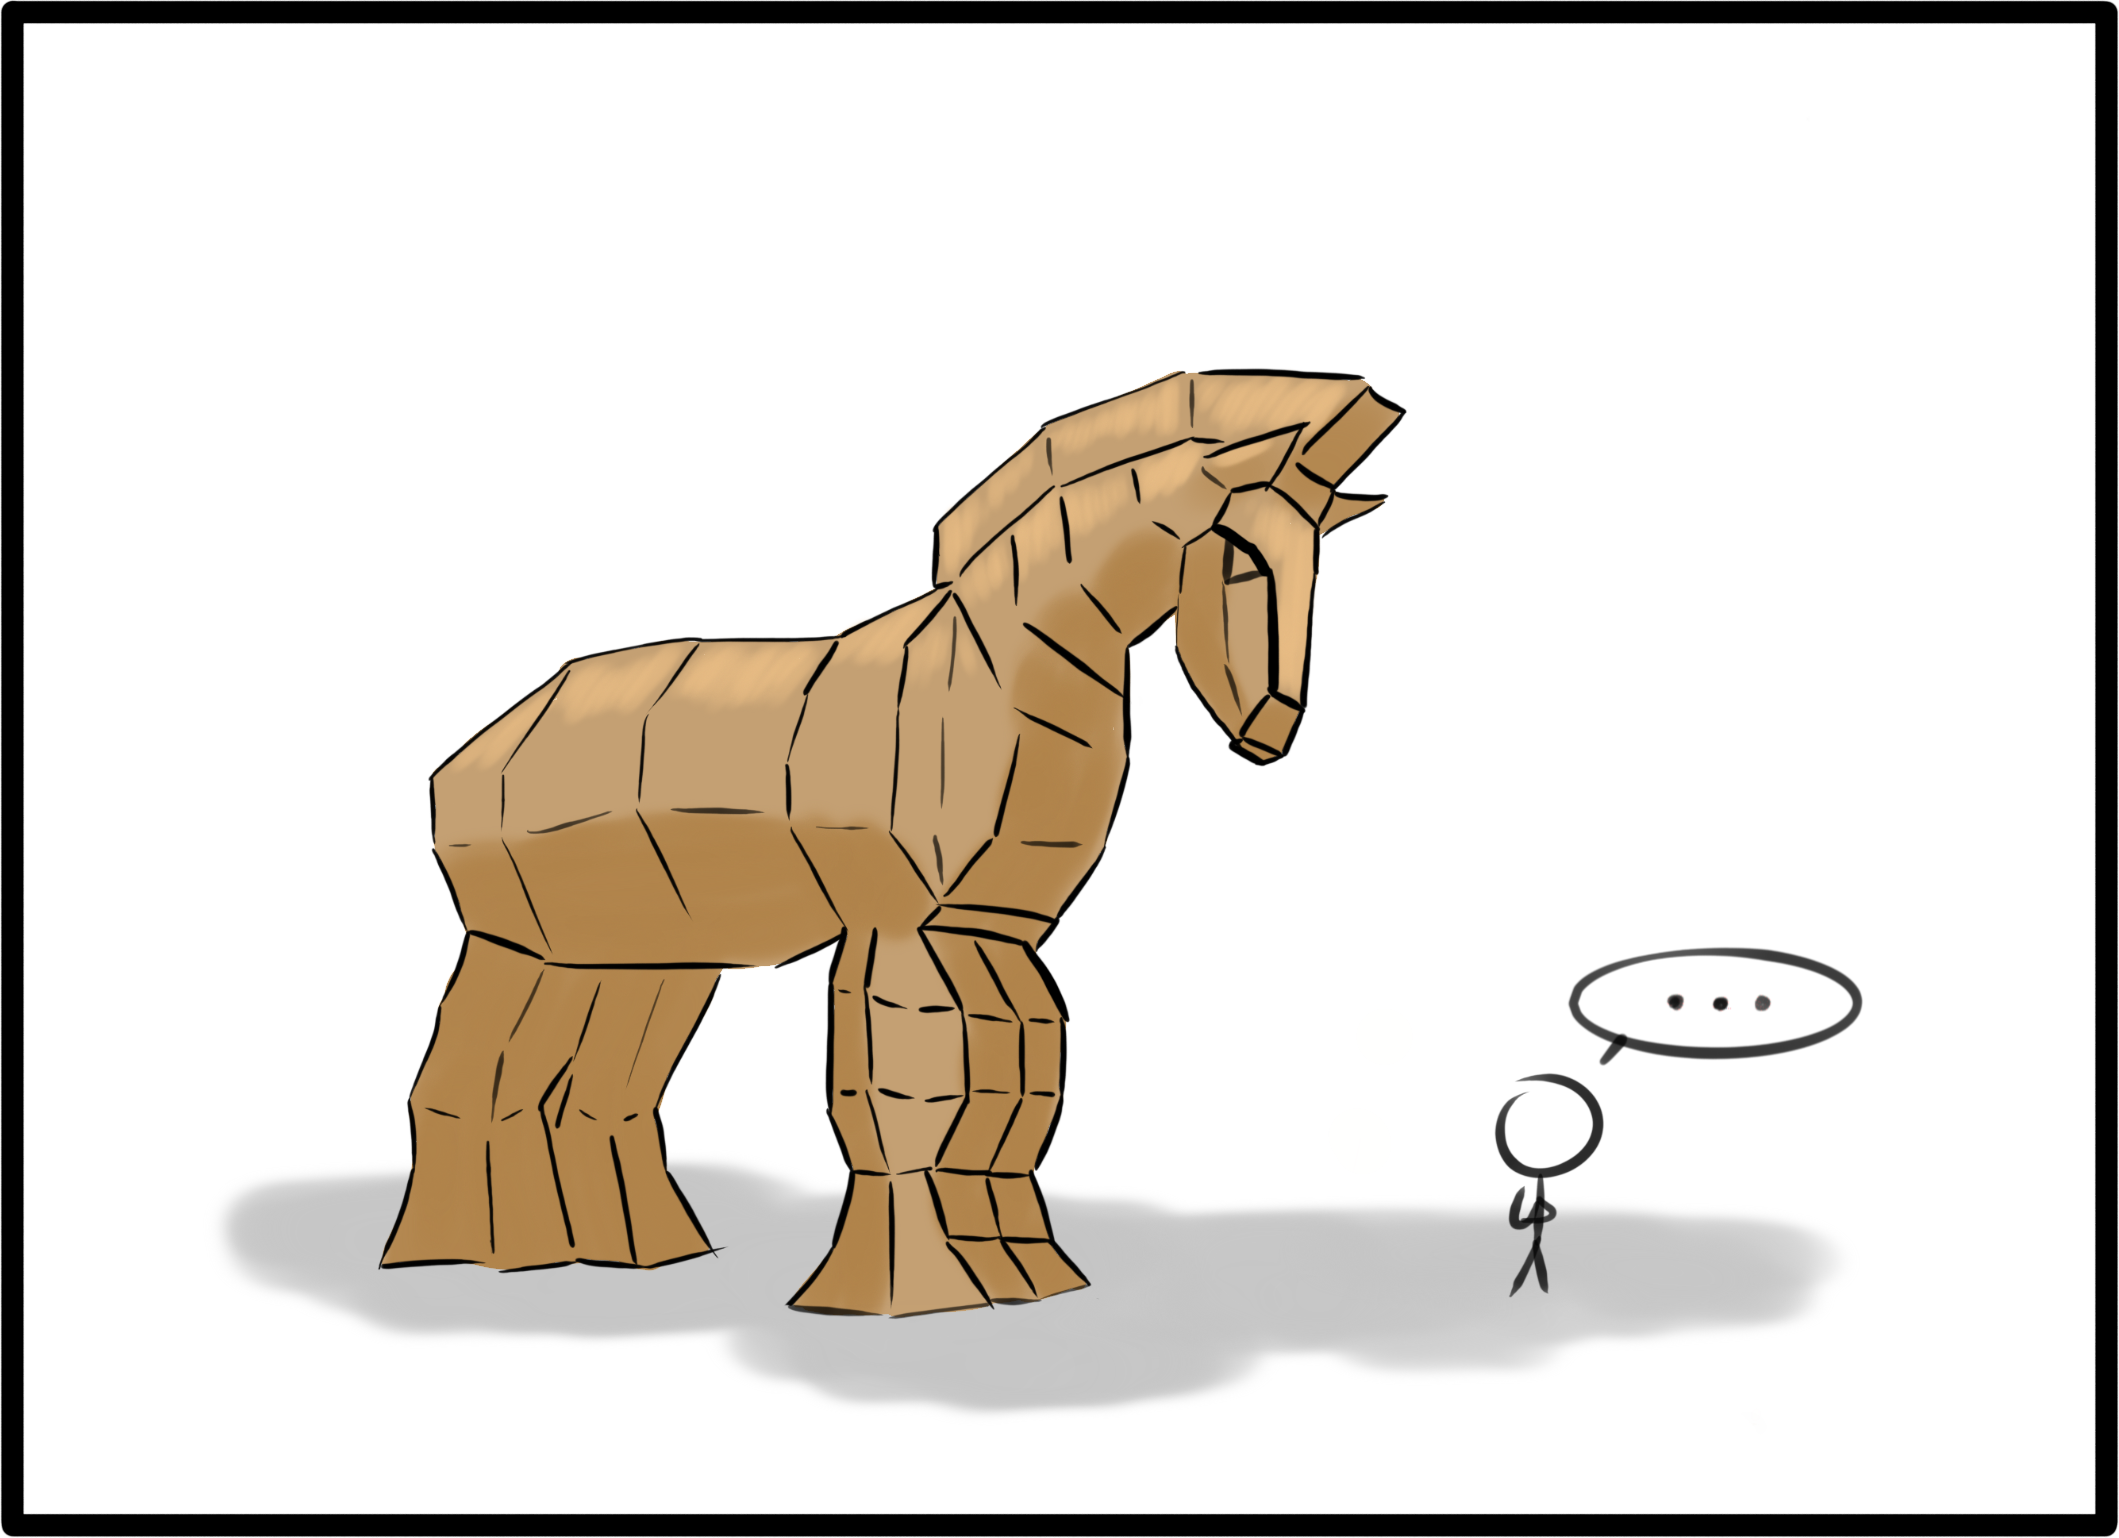 An illustration of a Trojan horse